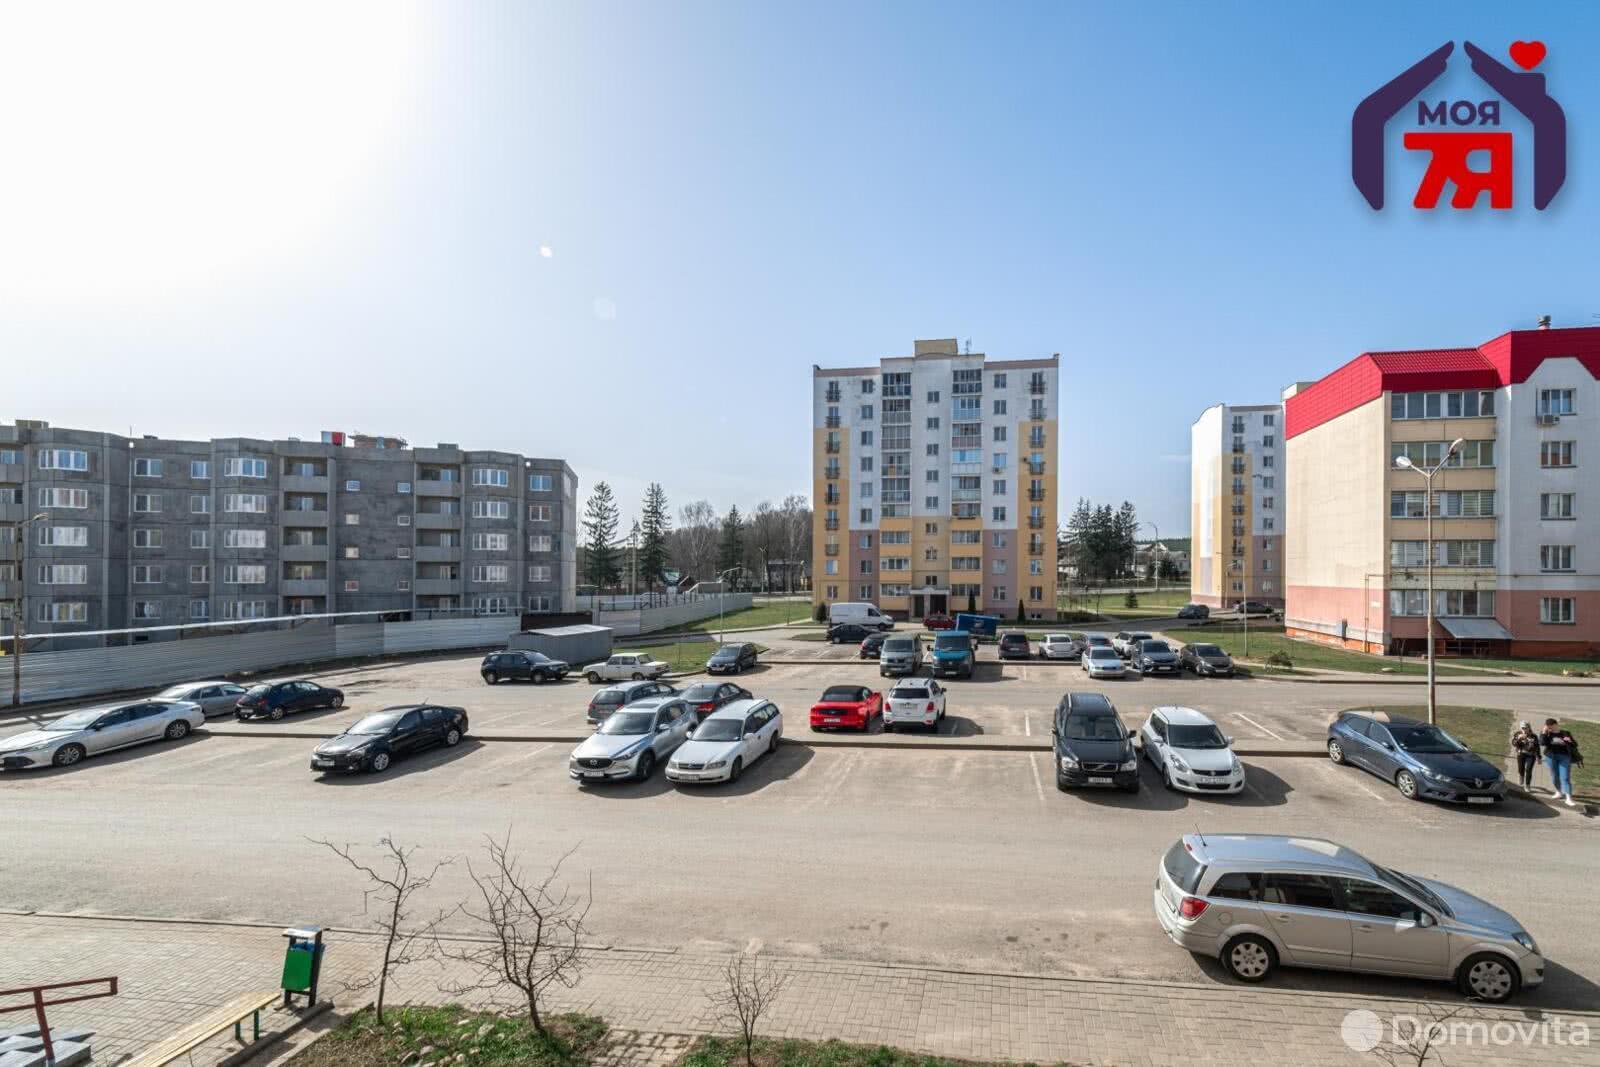 продажа квартиры, Колодищи, ул. Тюленина, д. 10А